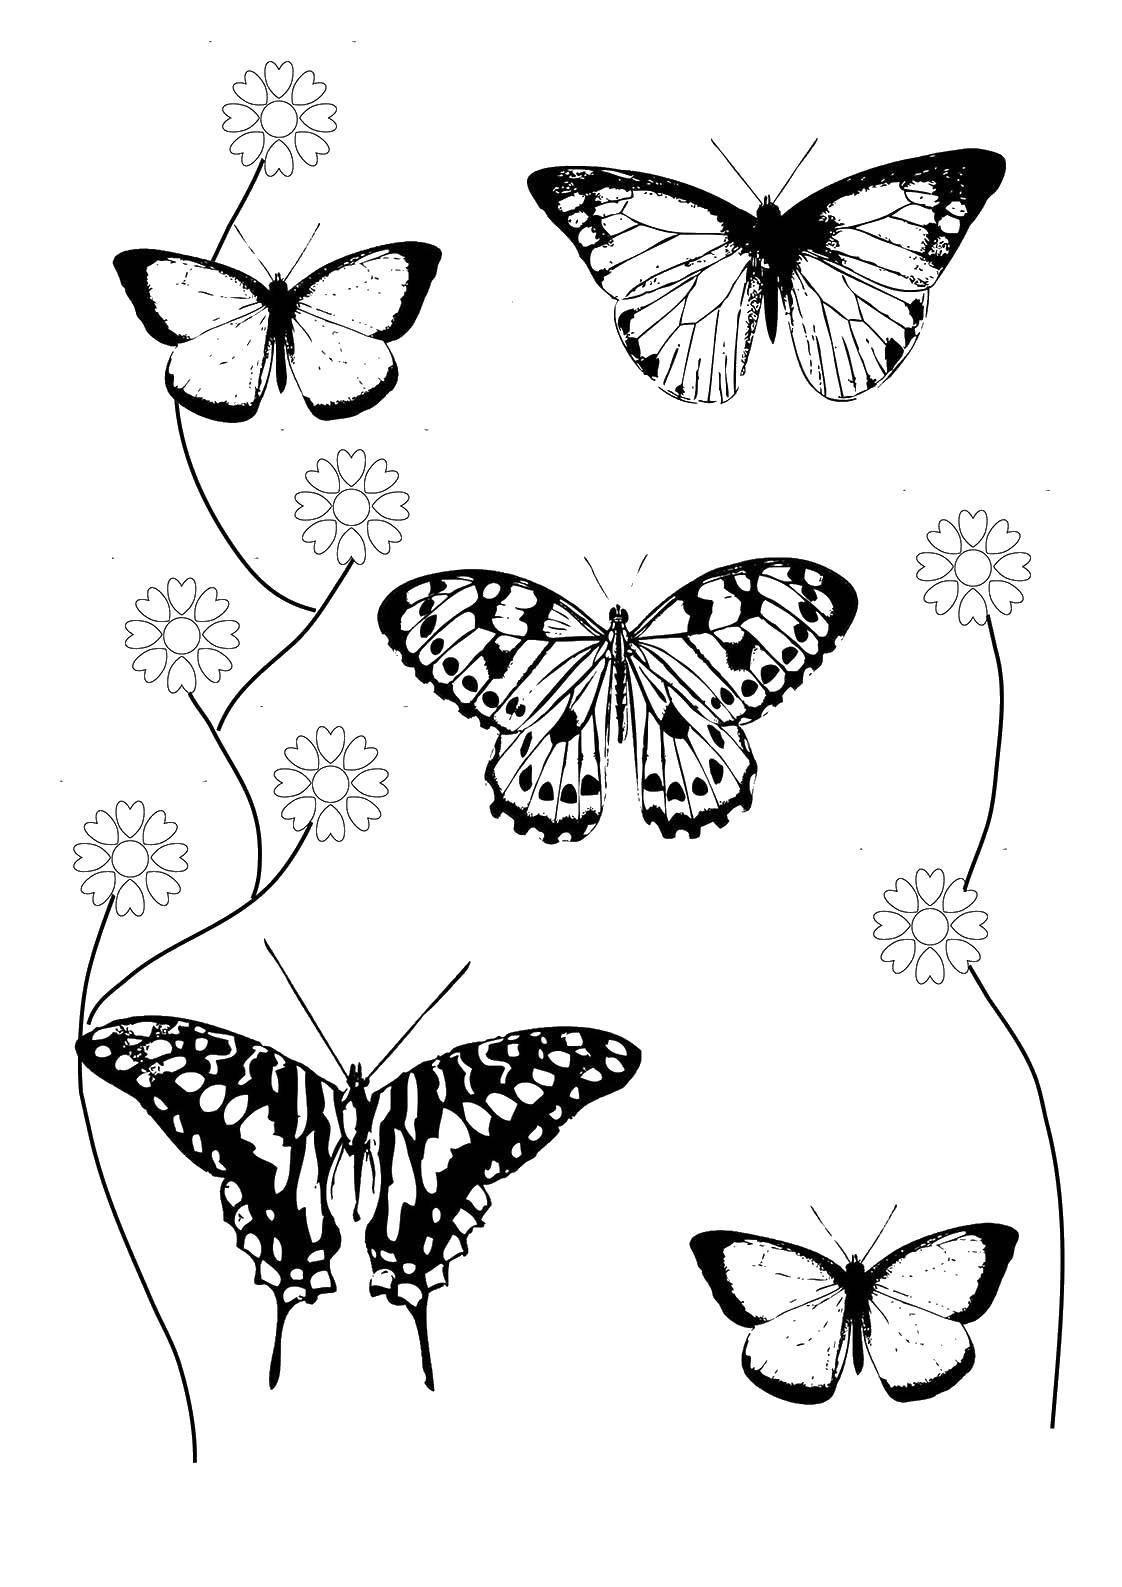 Coloring Flowers, butterflies. Category butterflies. Tags:  Butterfly.